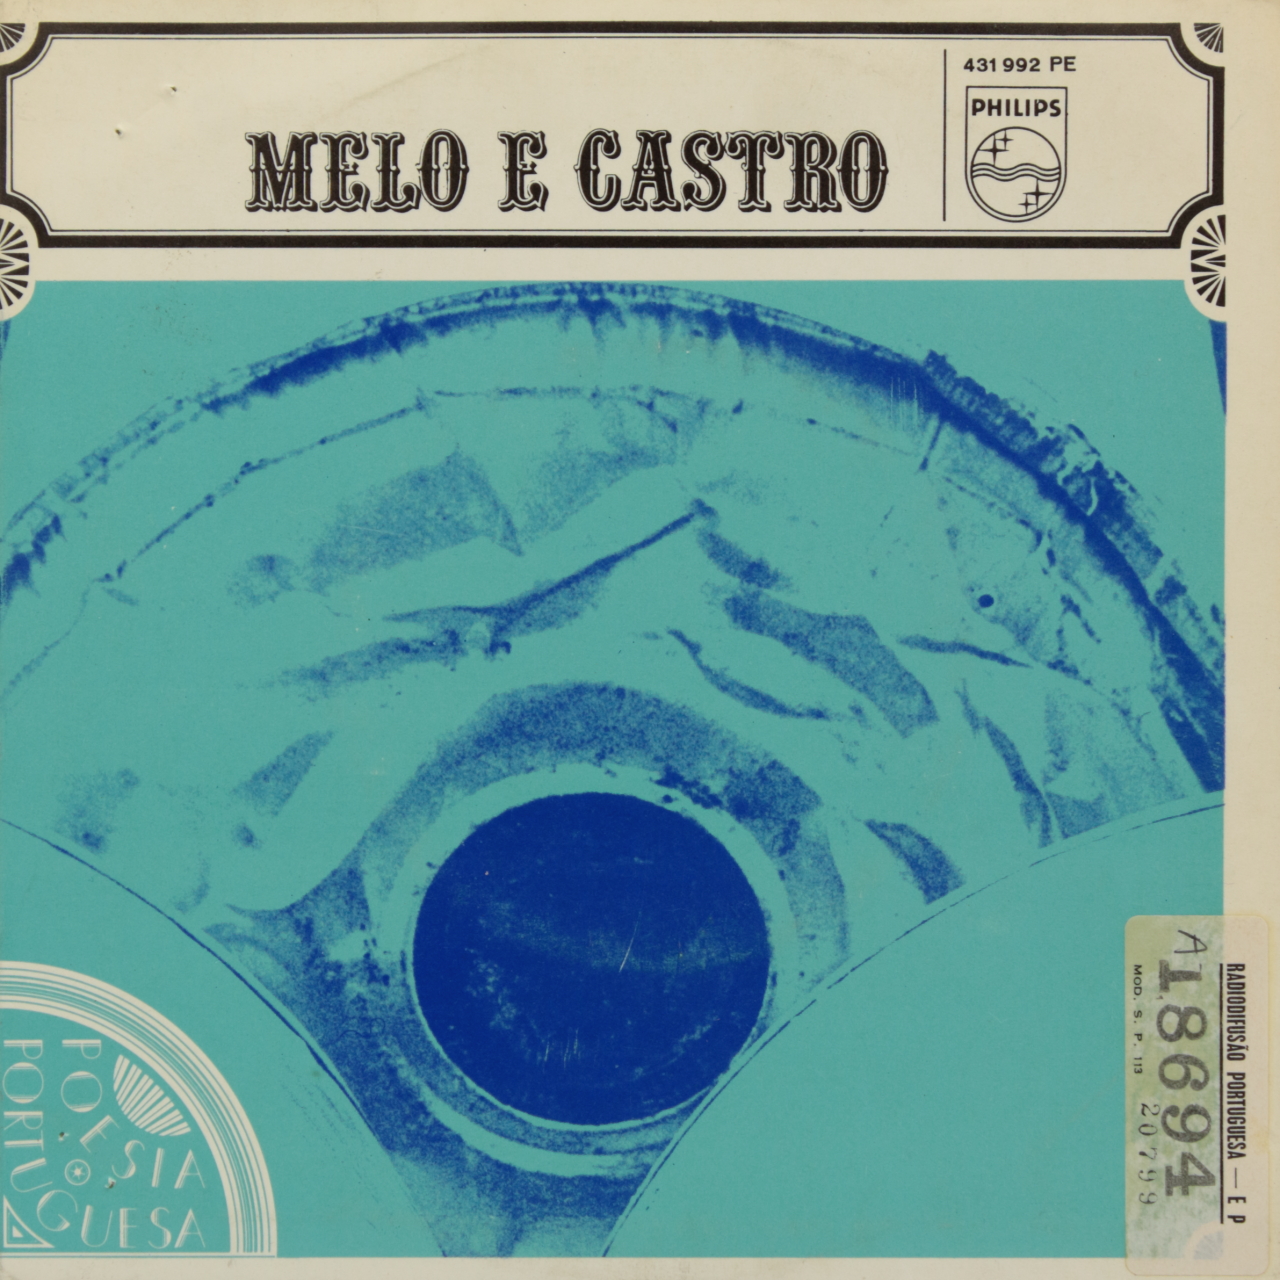 E. M. de Melo e Castro